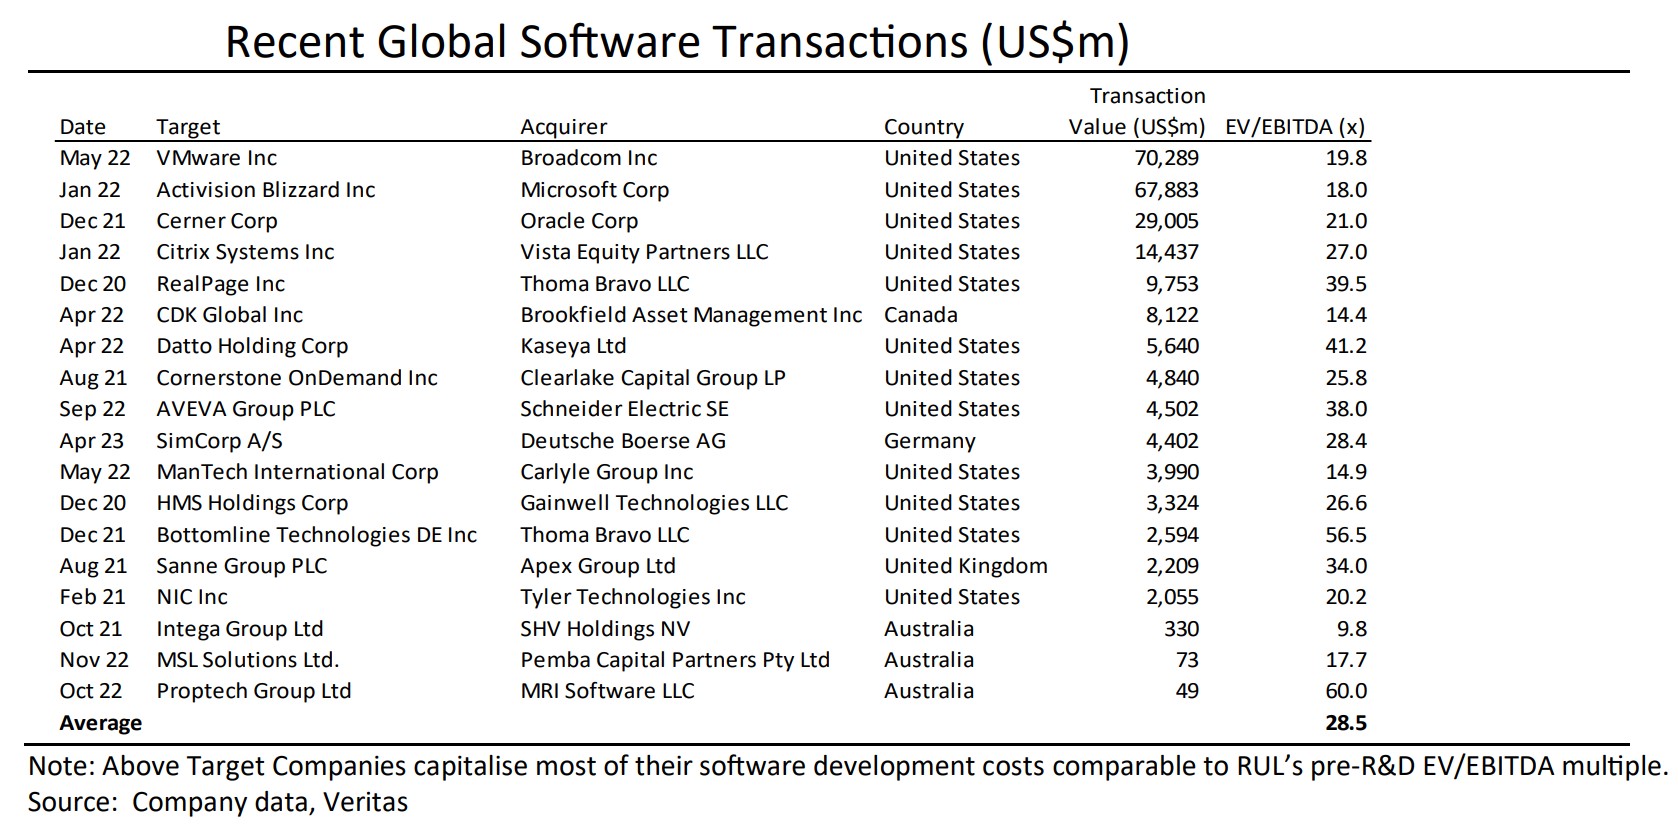 Figure 6: Recent Global Software Transactions. Source: Veritas Securities.